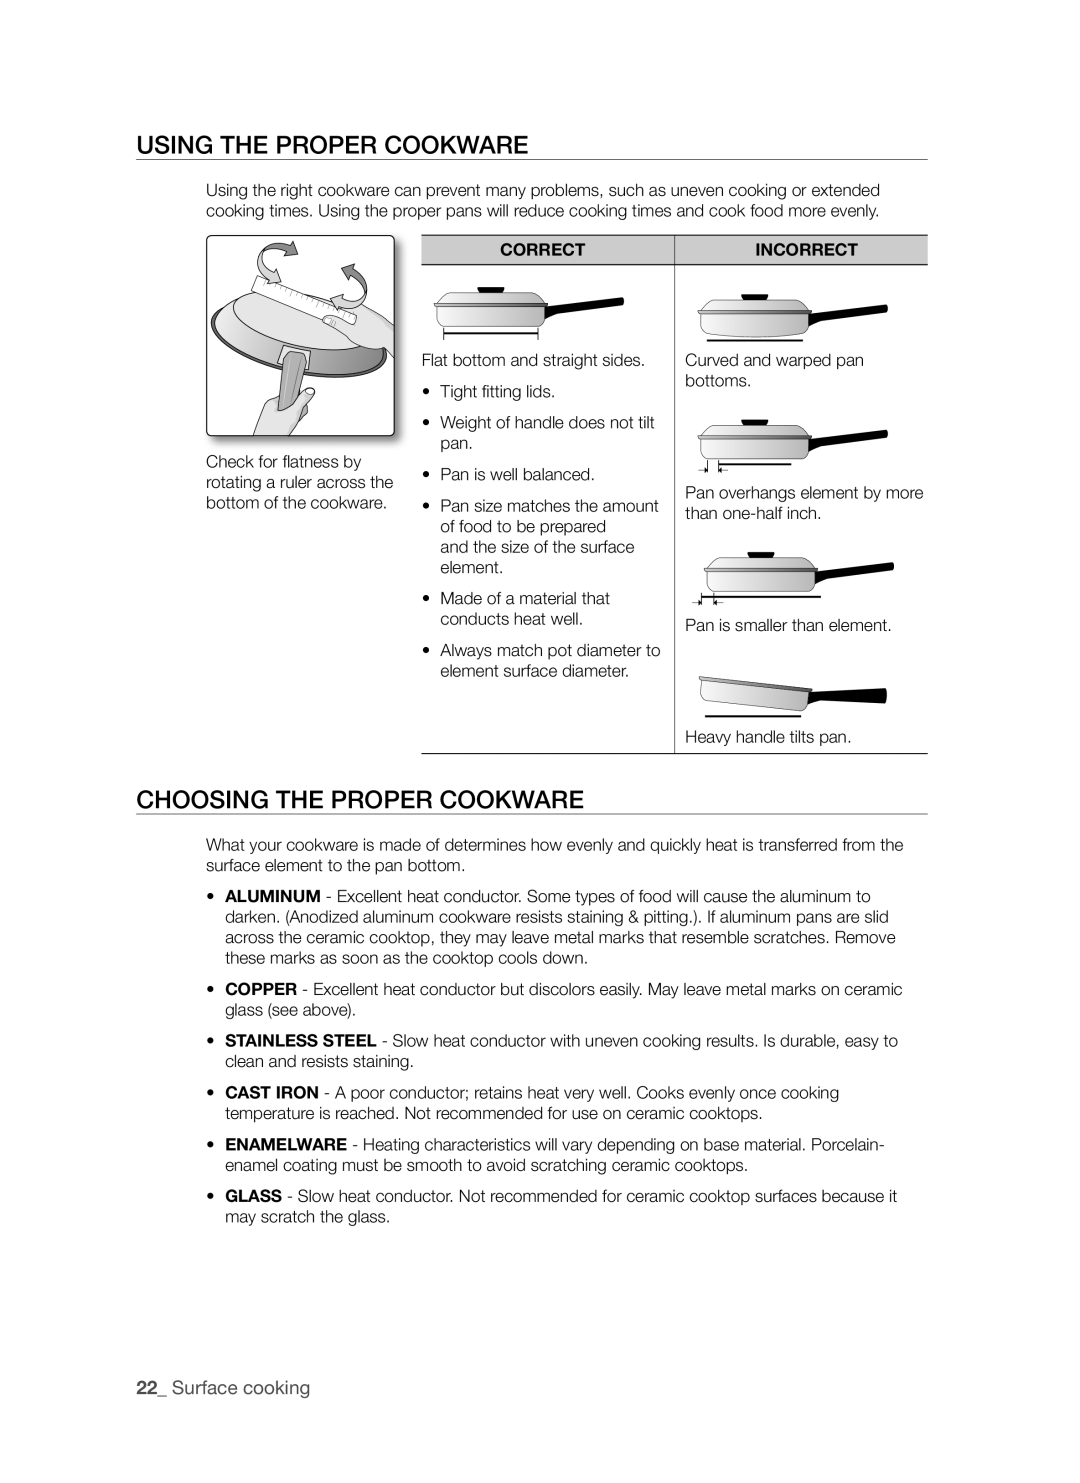 Samsung FE-R500WW user manual Using the proper cookware, Choosing the proper cookware, Surface cooking 